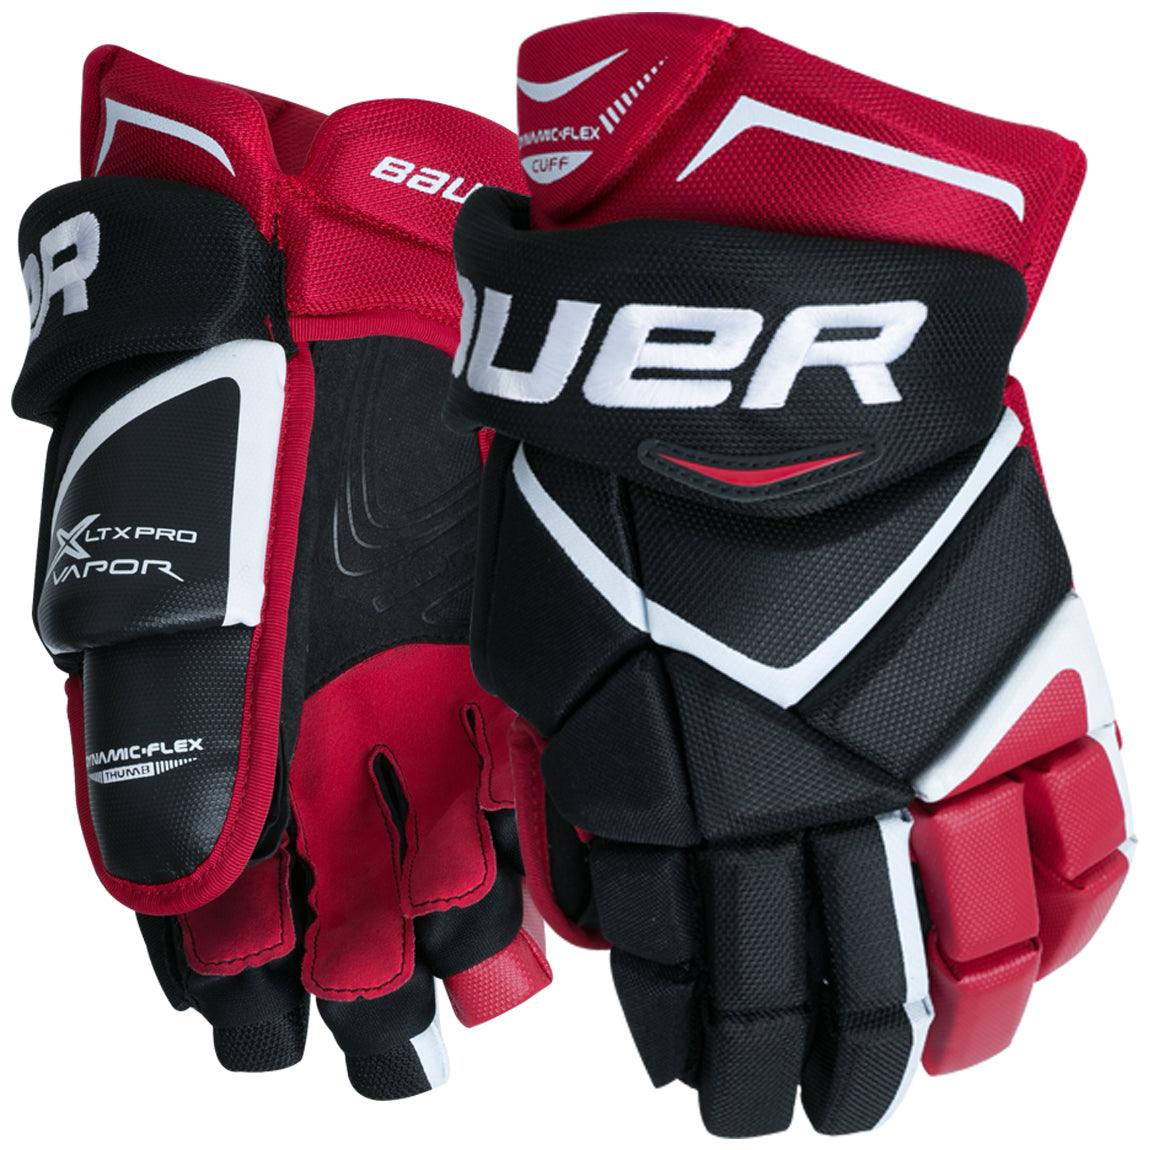 Vapor XLTX Pro Gloves - Senior - Sports Excellence